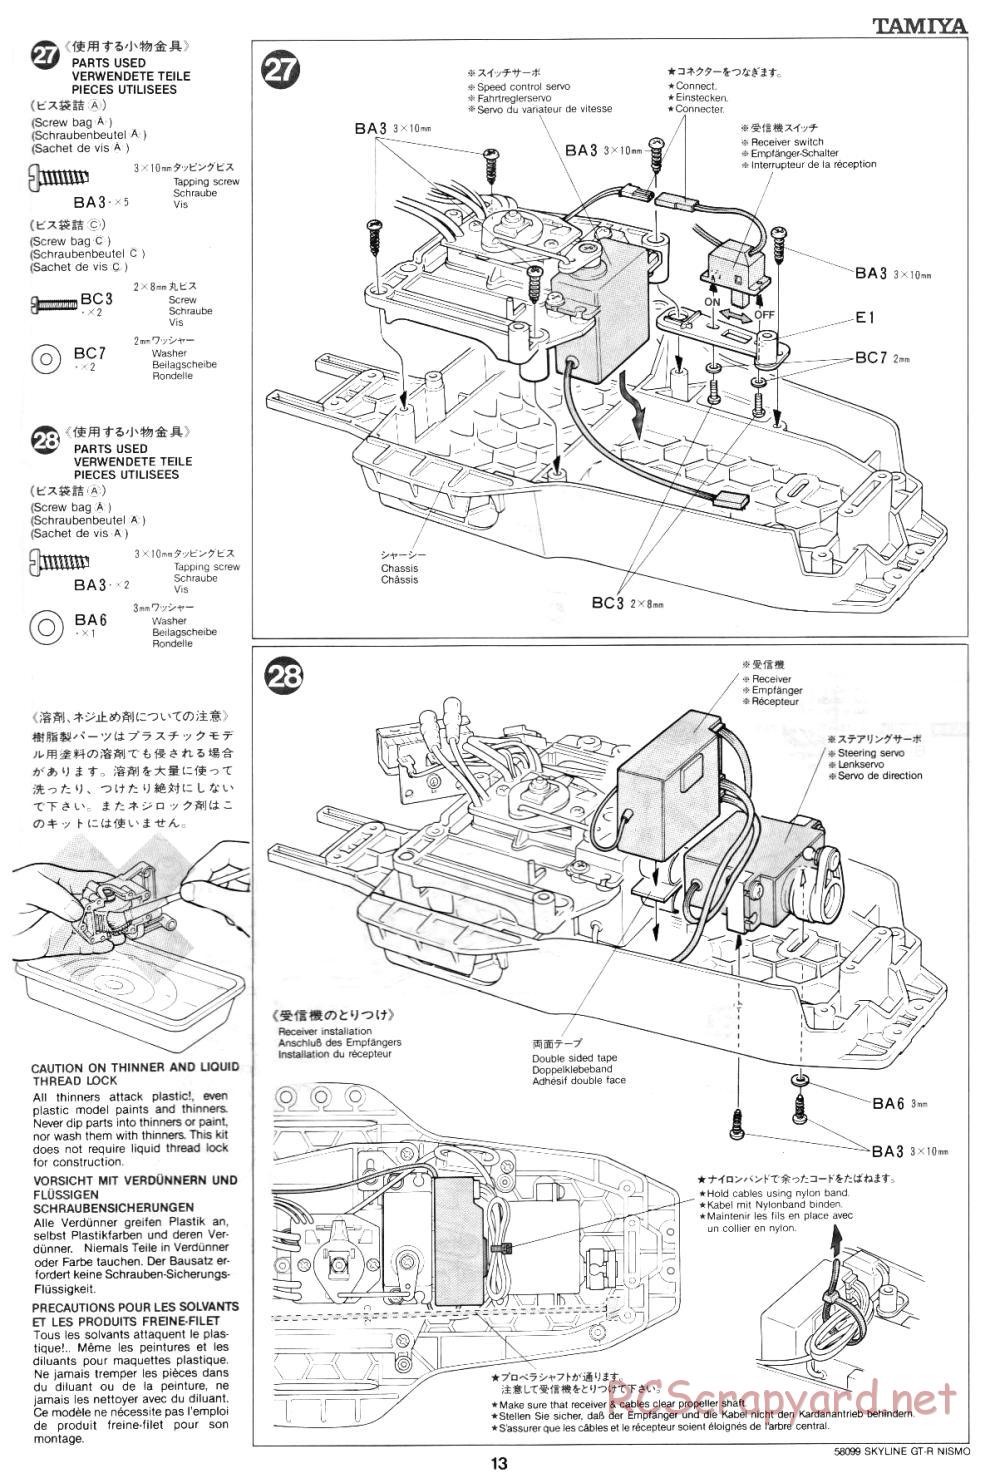 Tamiya - Nissan Skyline GT-R Nismo - 58099 - Manual - Page 13